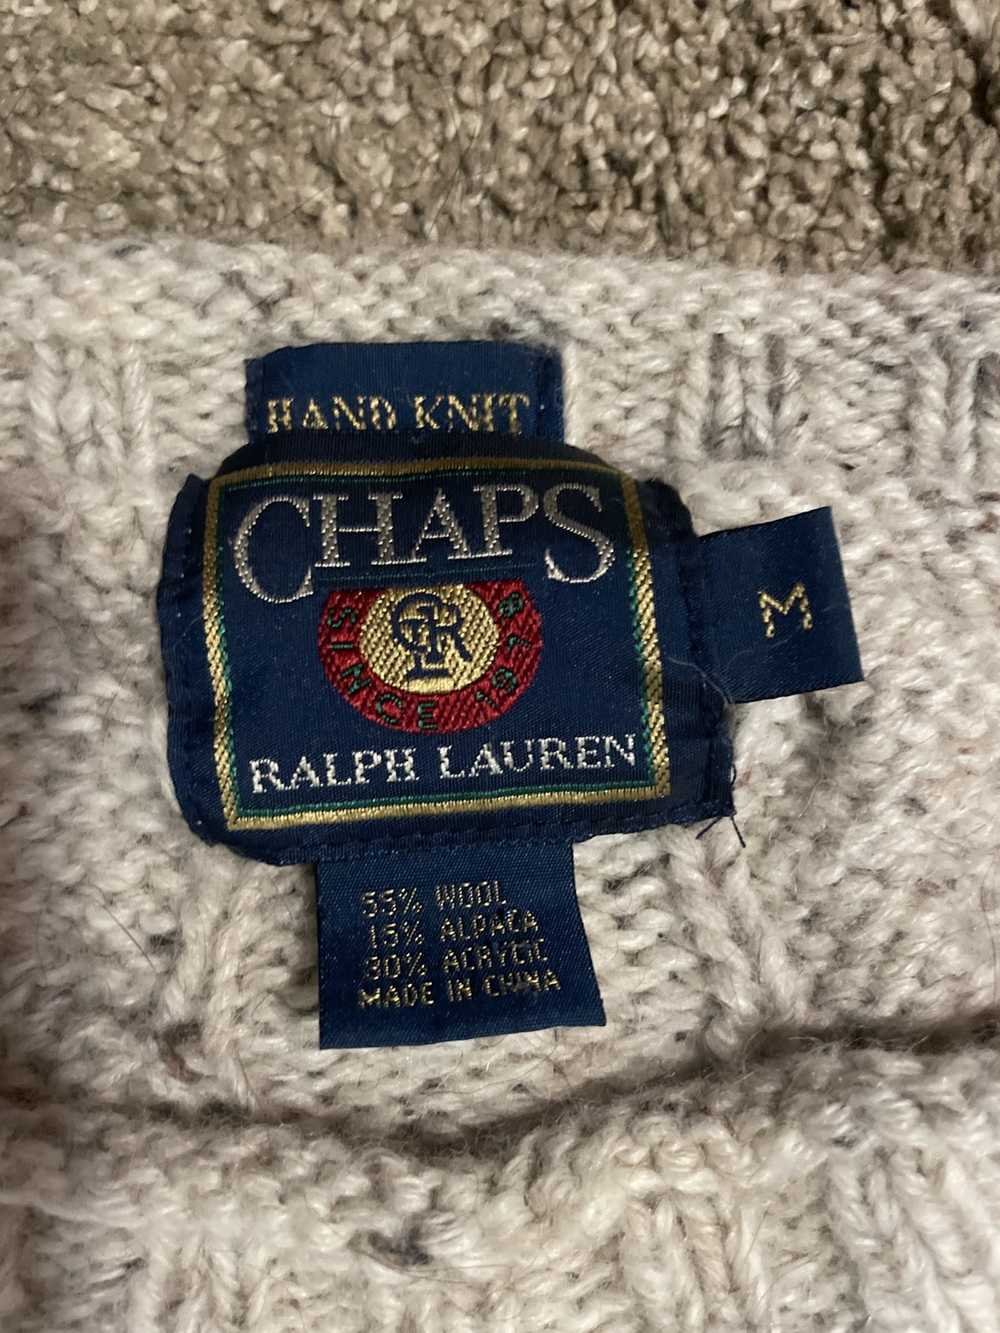 Chaps Ralph Lauren Chaps Ralph Lauren Knit Sweater - image 5